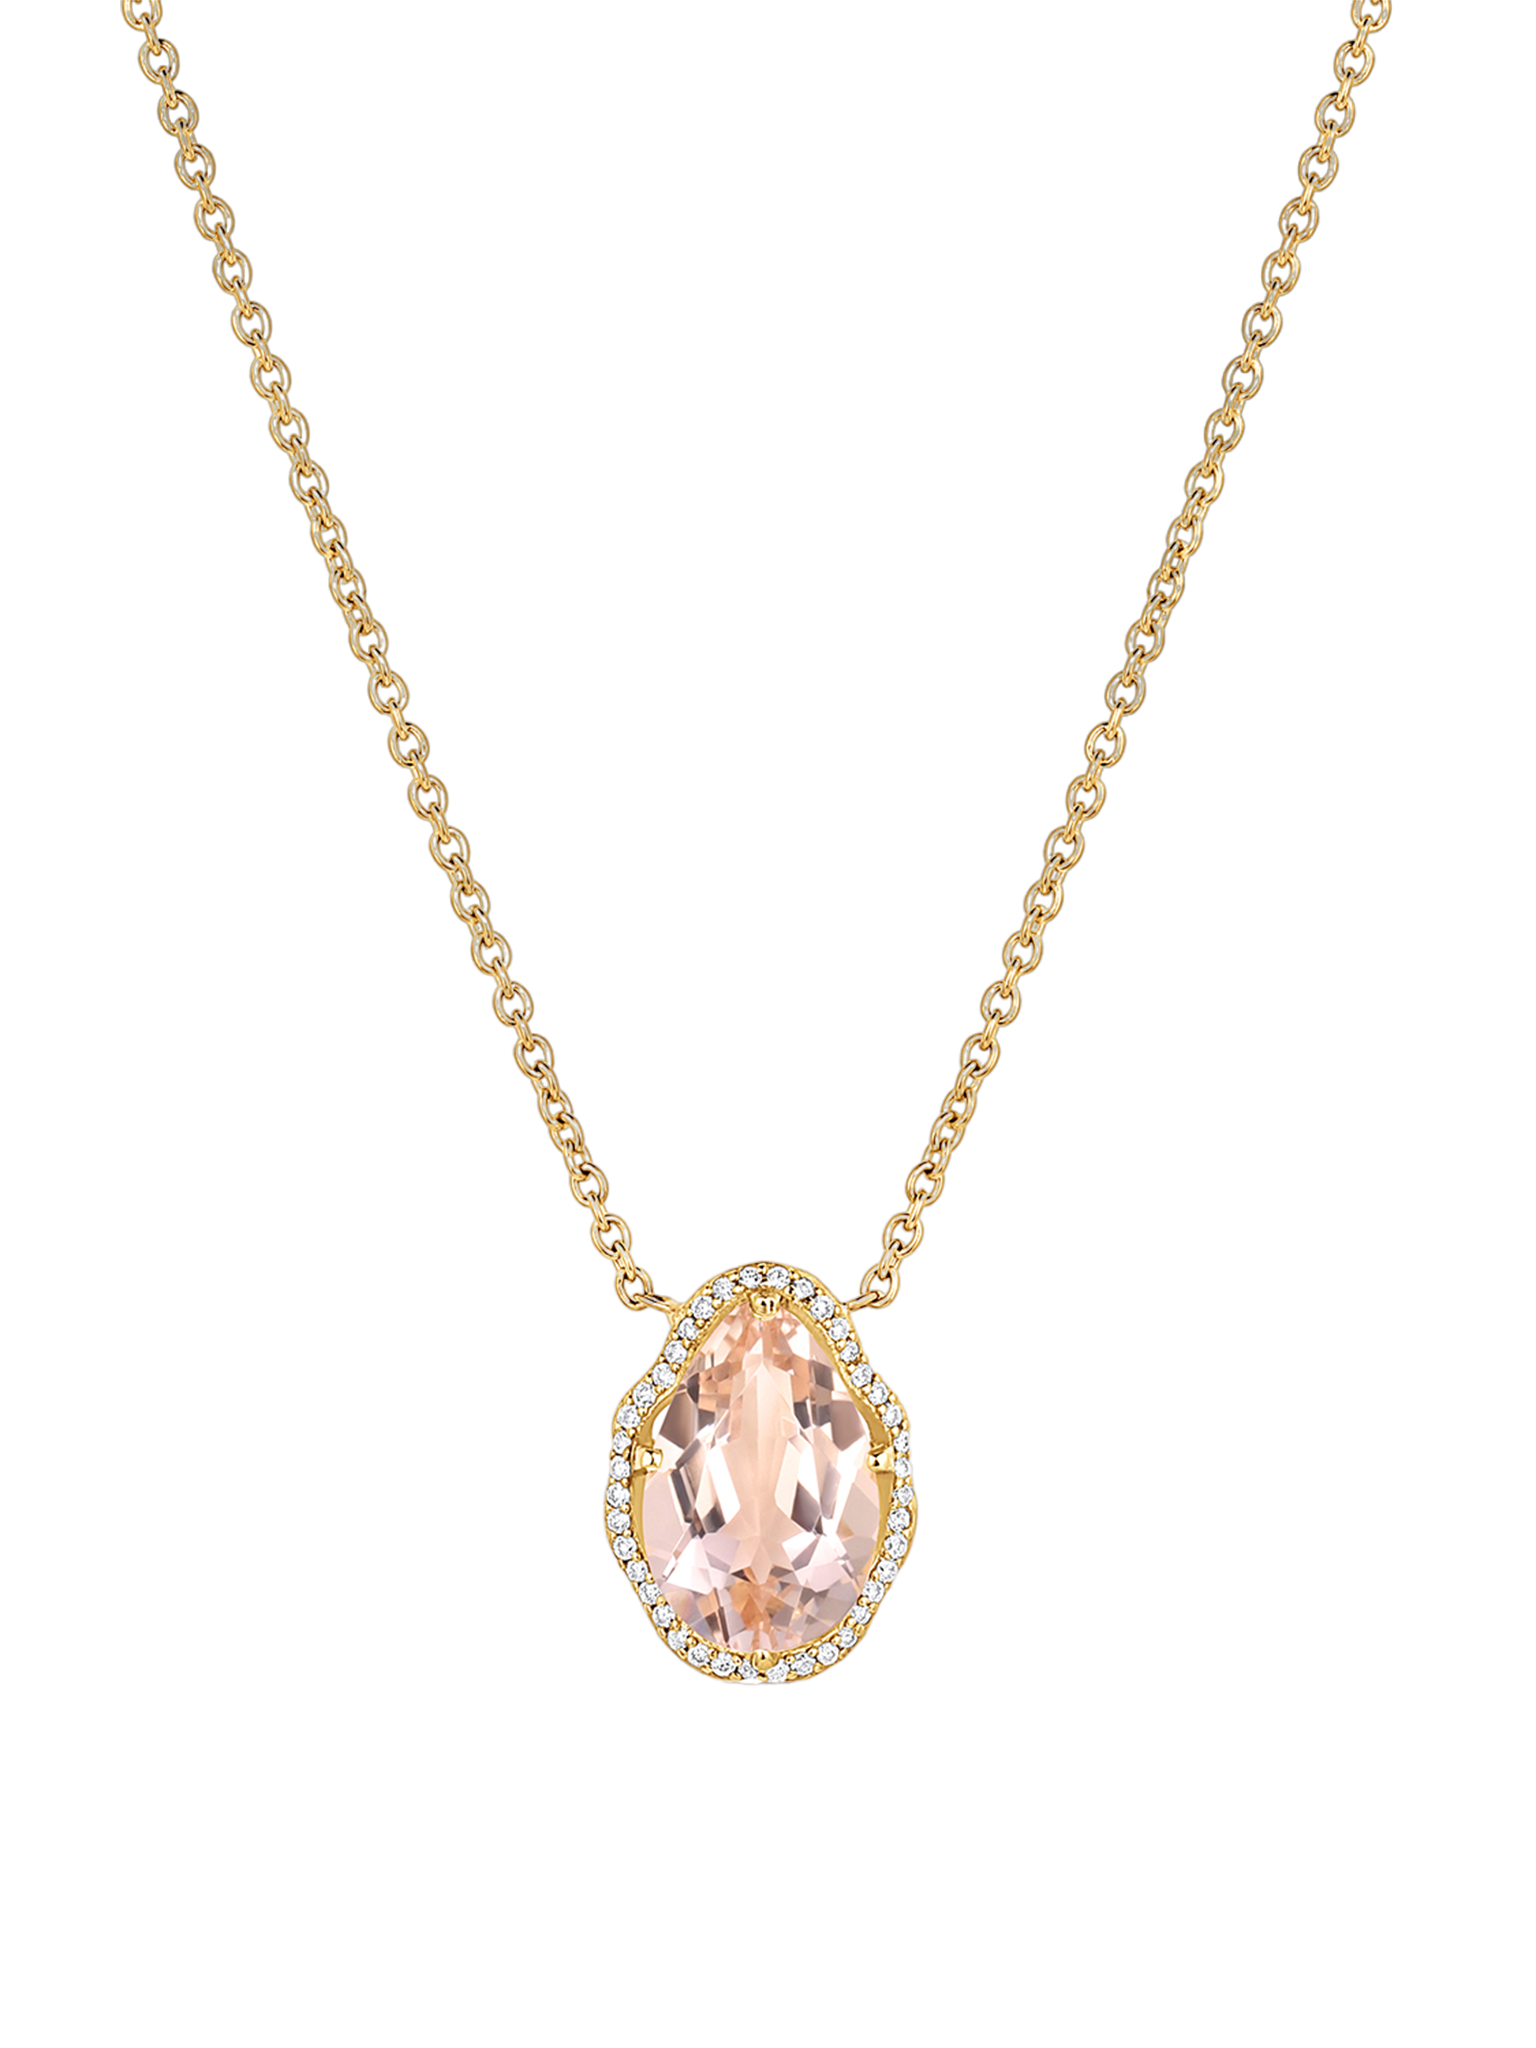 Glow necklace peach morganite with diamonds